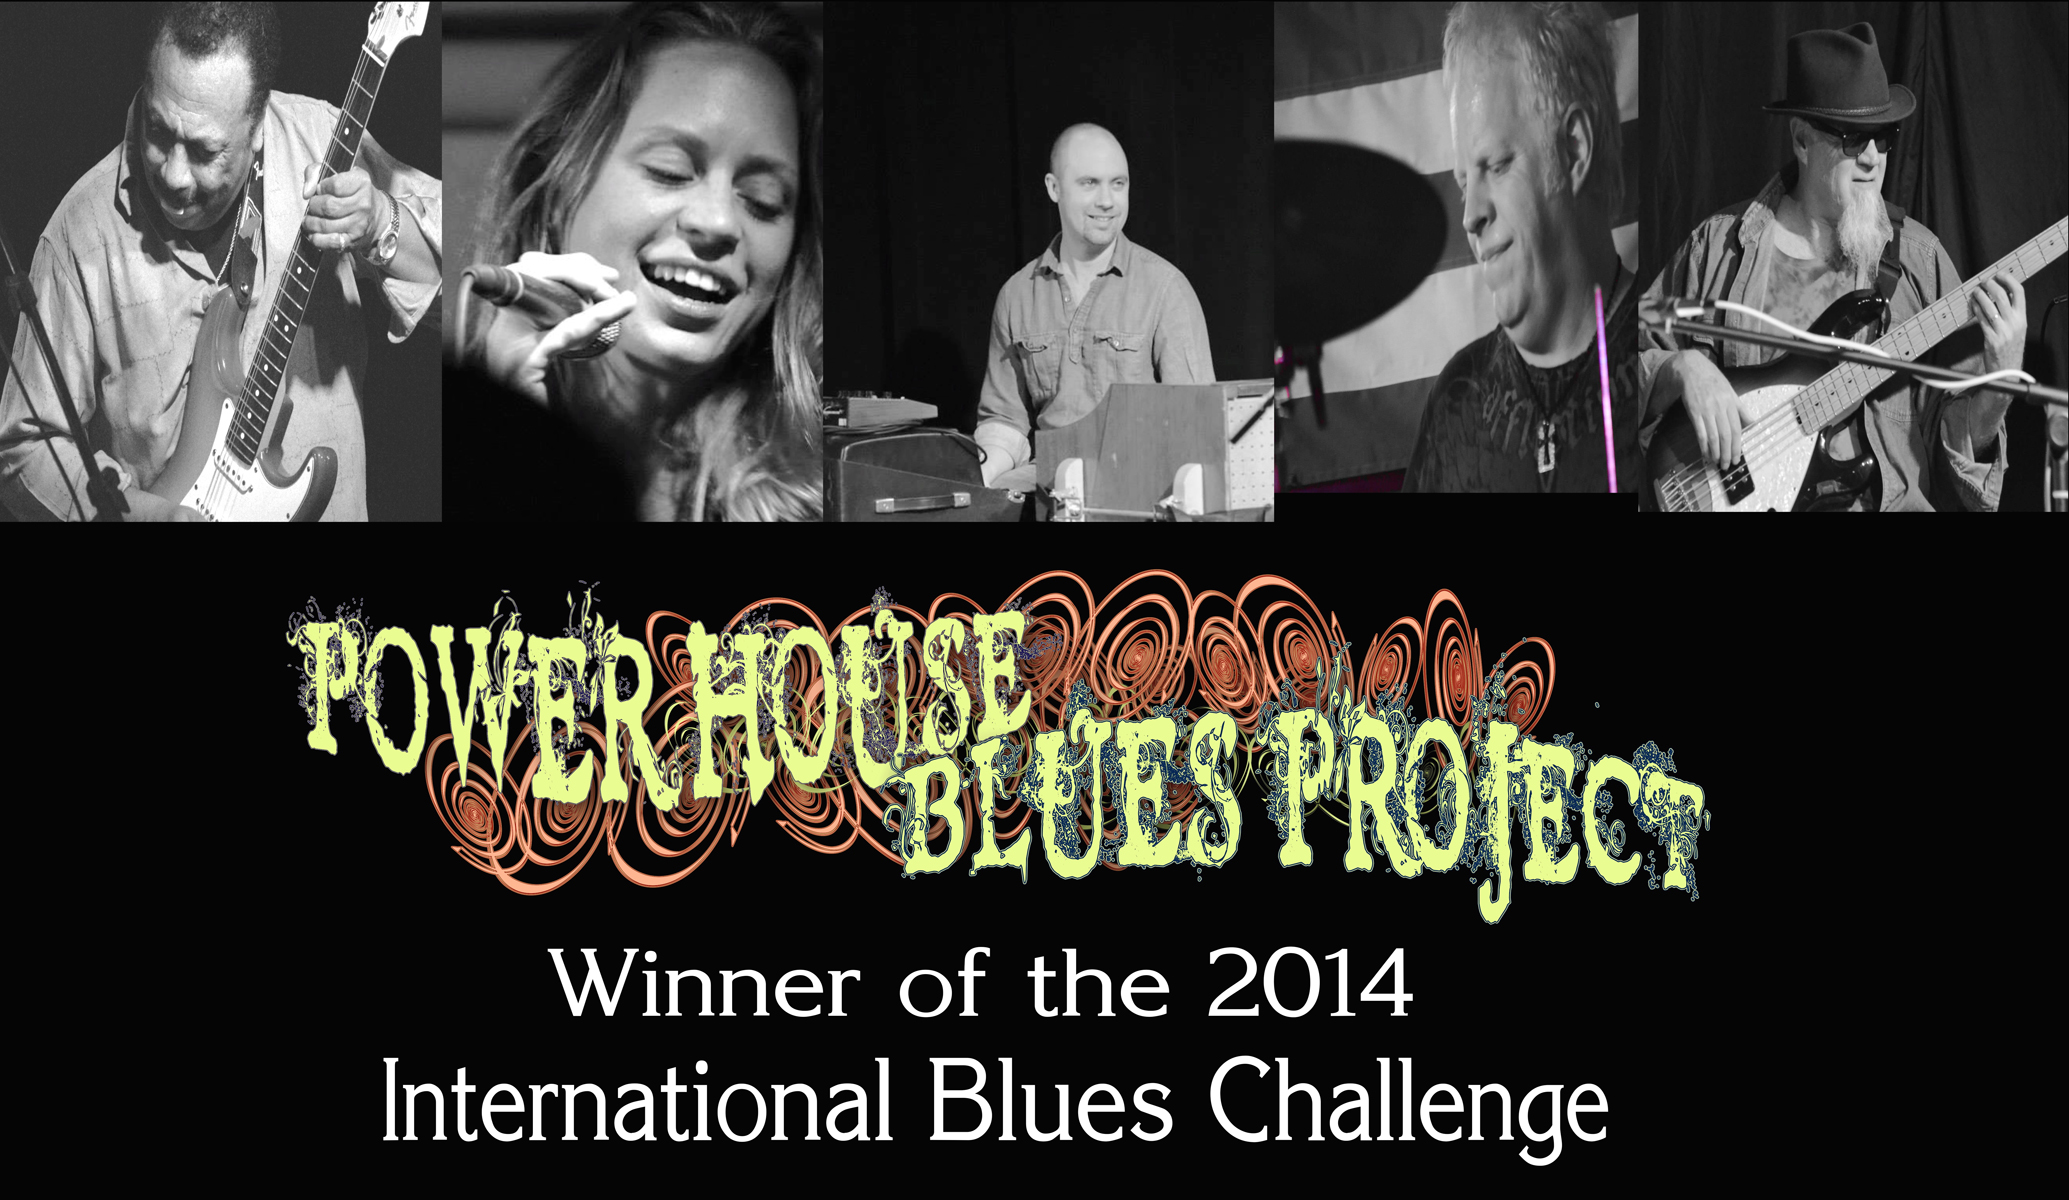 Powerhouse Blues Project